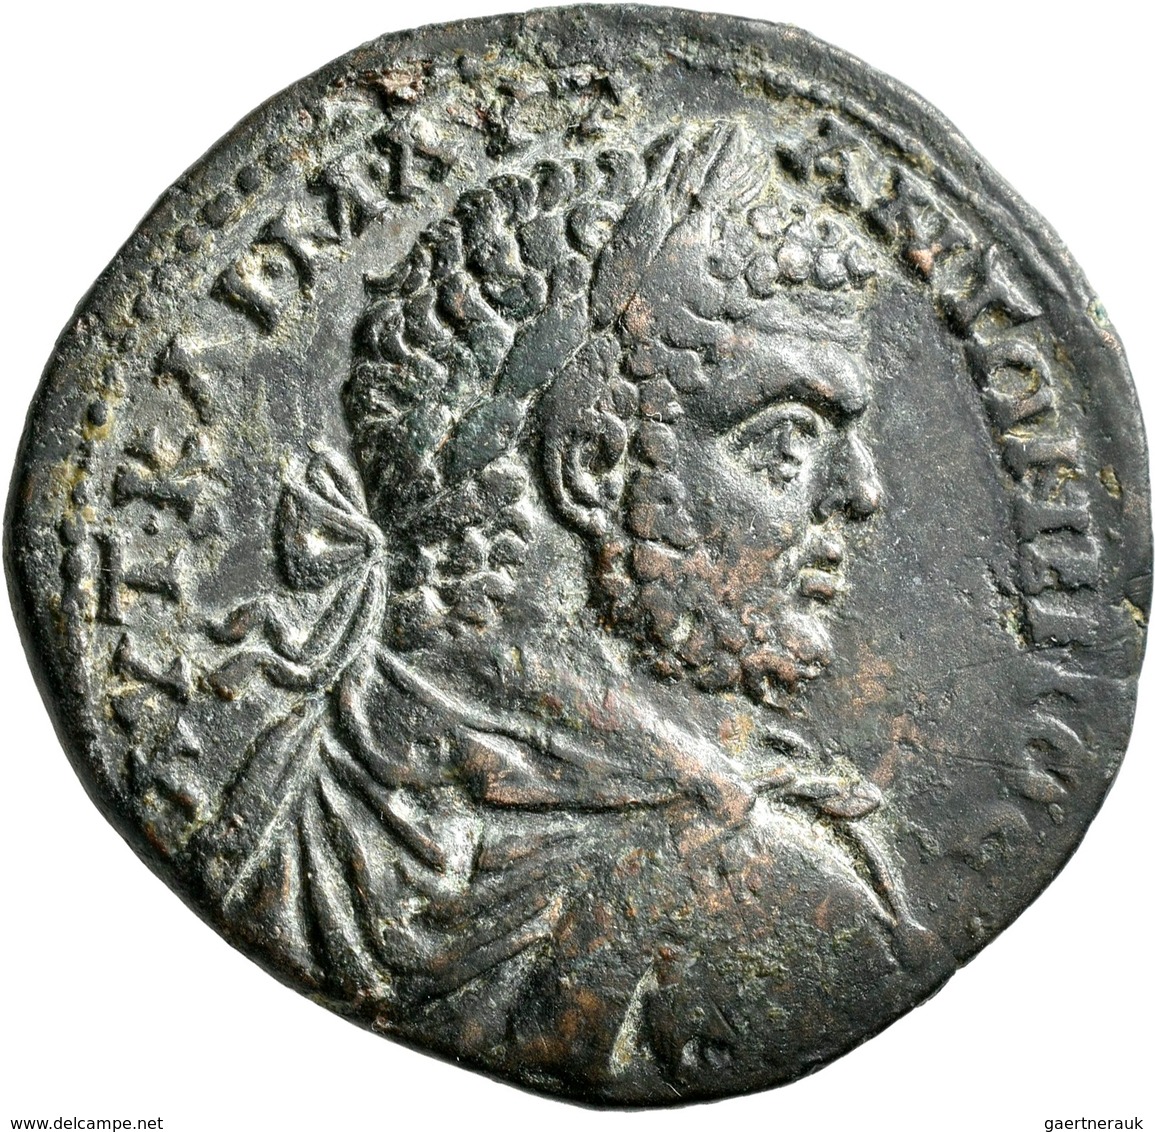 Caracalla (196 - 198 - 217): Amisos In Pontos, Æ Sesterz (sestertius). Geprägt 245 = 213/4 AD. Kopf - Die Severische Dynastie (193 / 235)